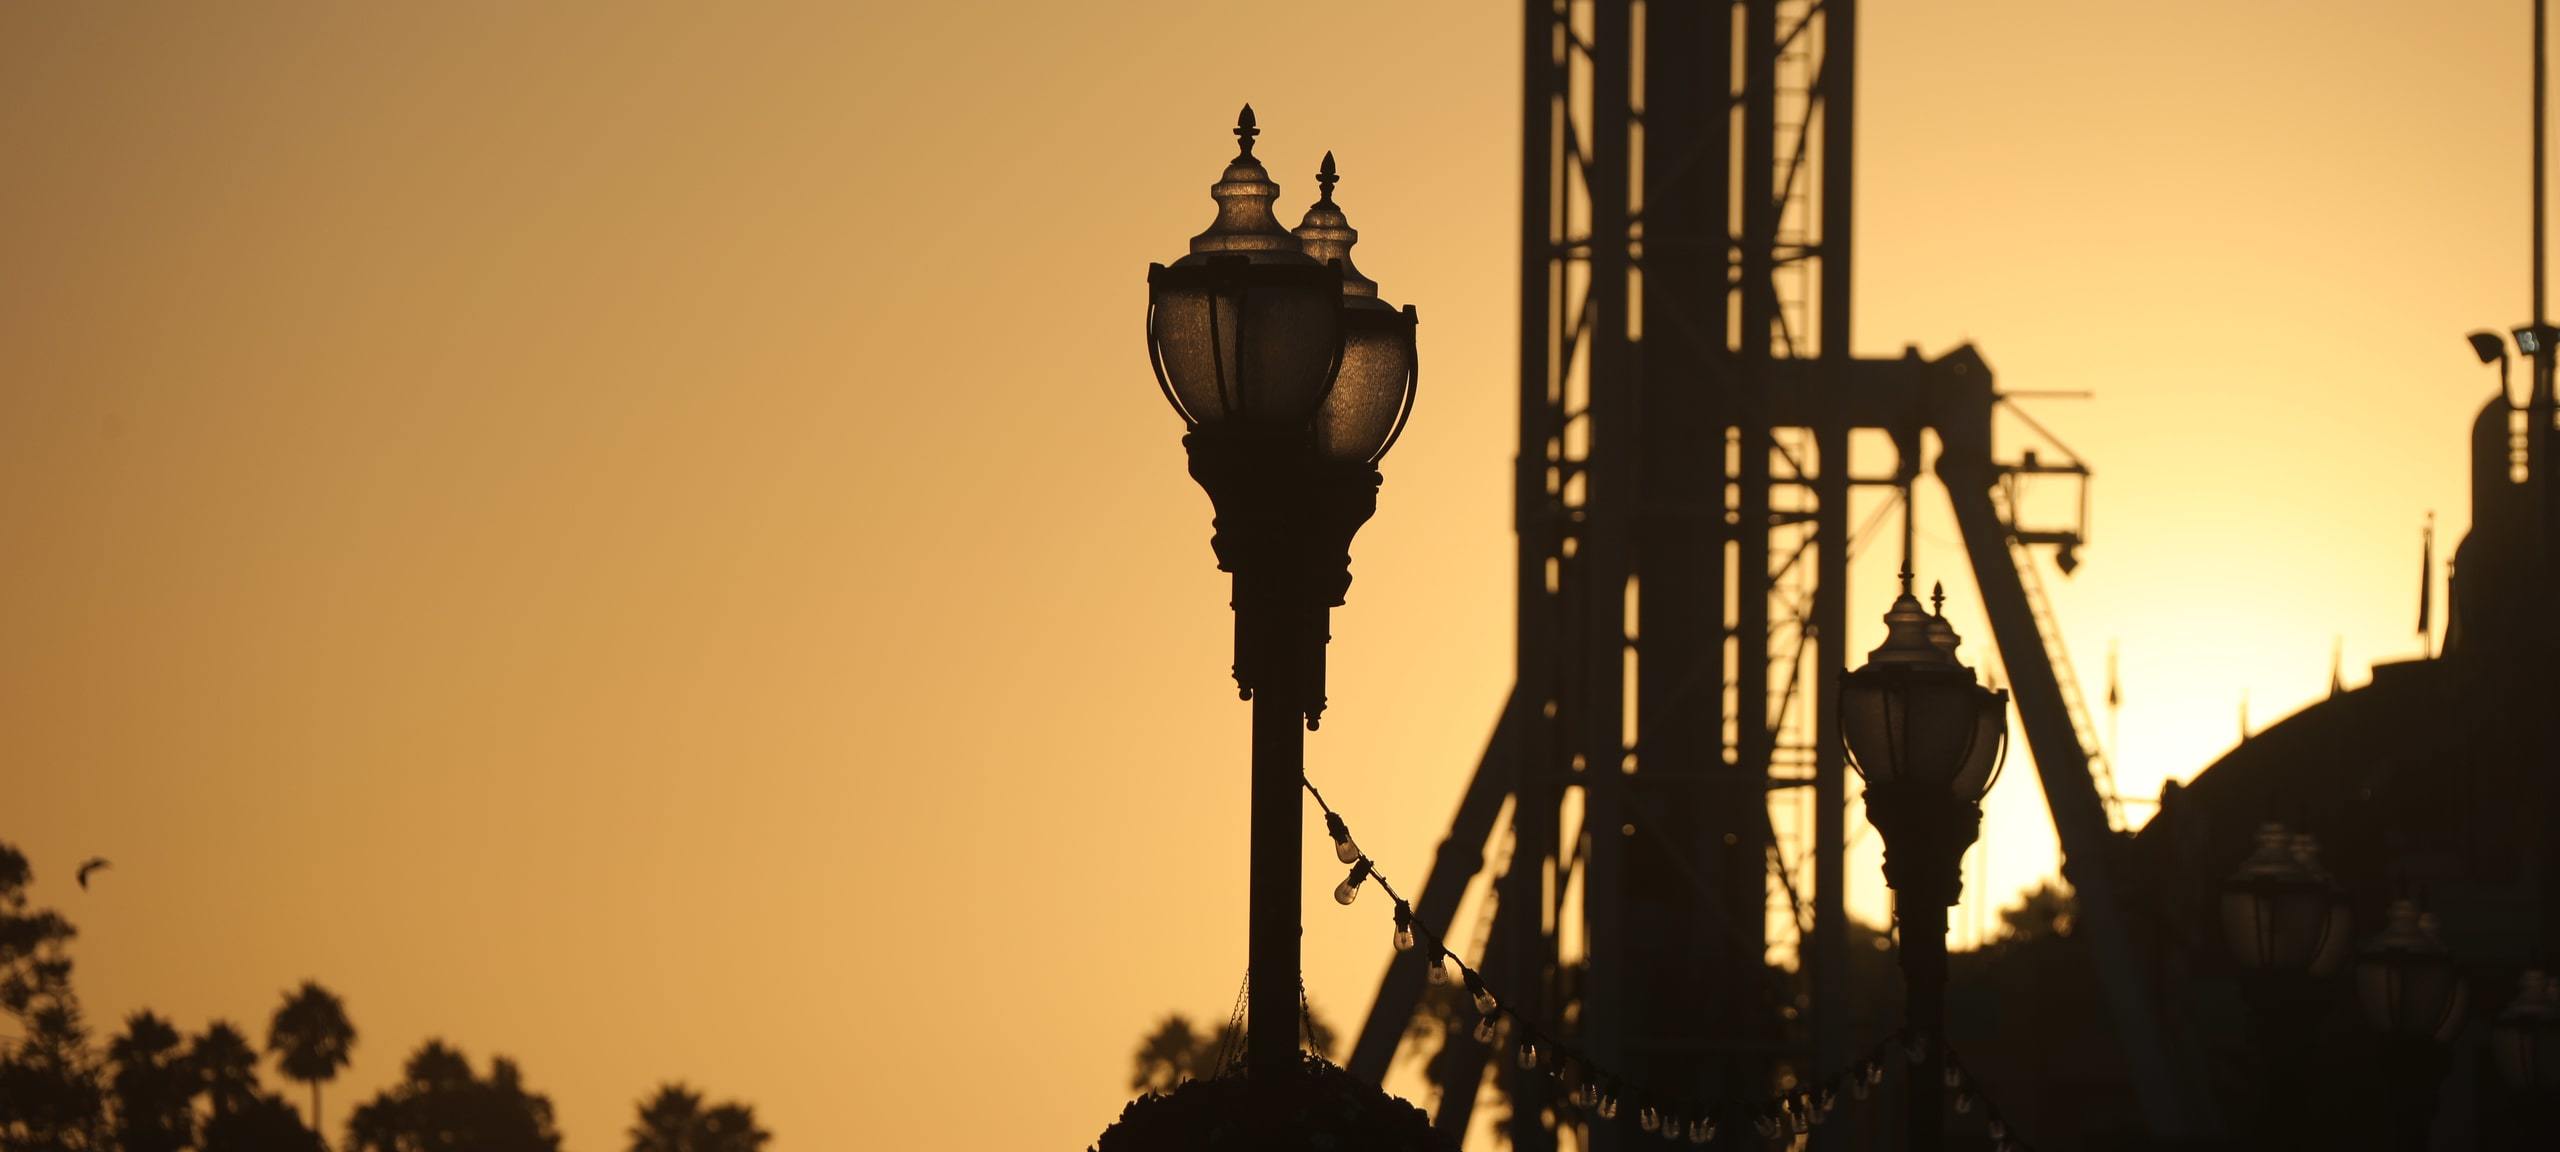 Silhouette of street lamps and amusement park rides during sunset, Santa Cruz County Fair